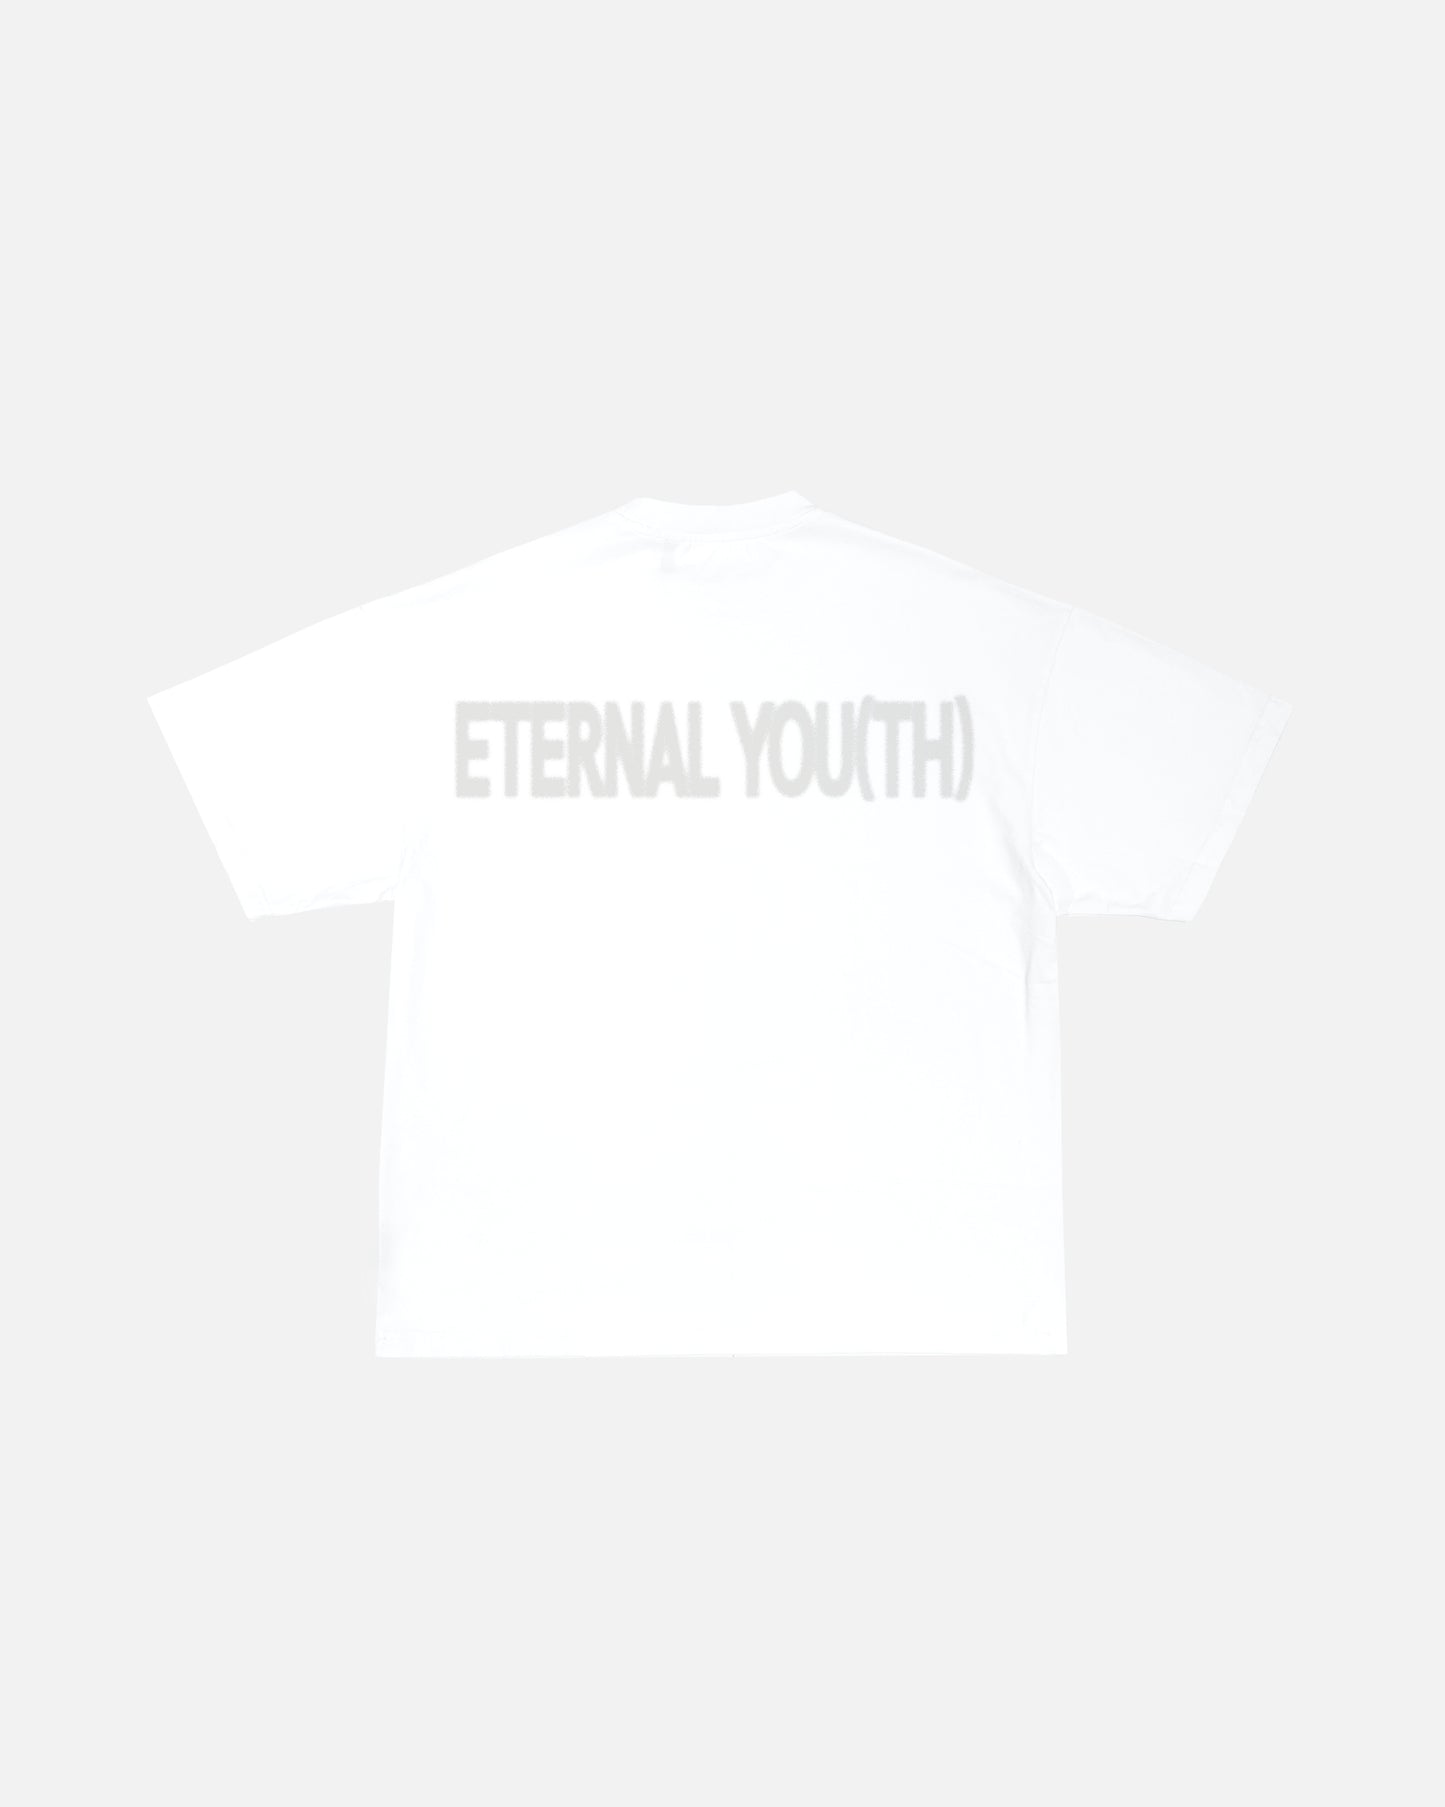 T-SHIRT – ETERNAL YOU(TH)